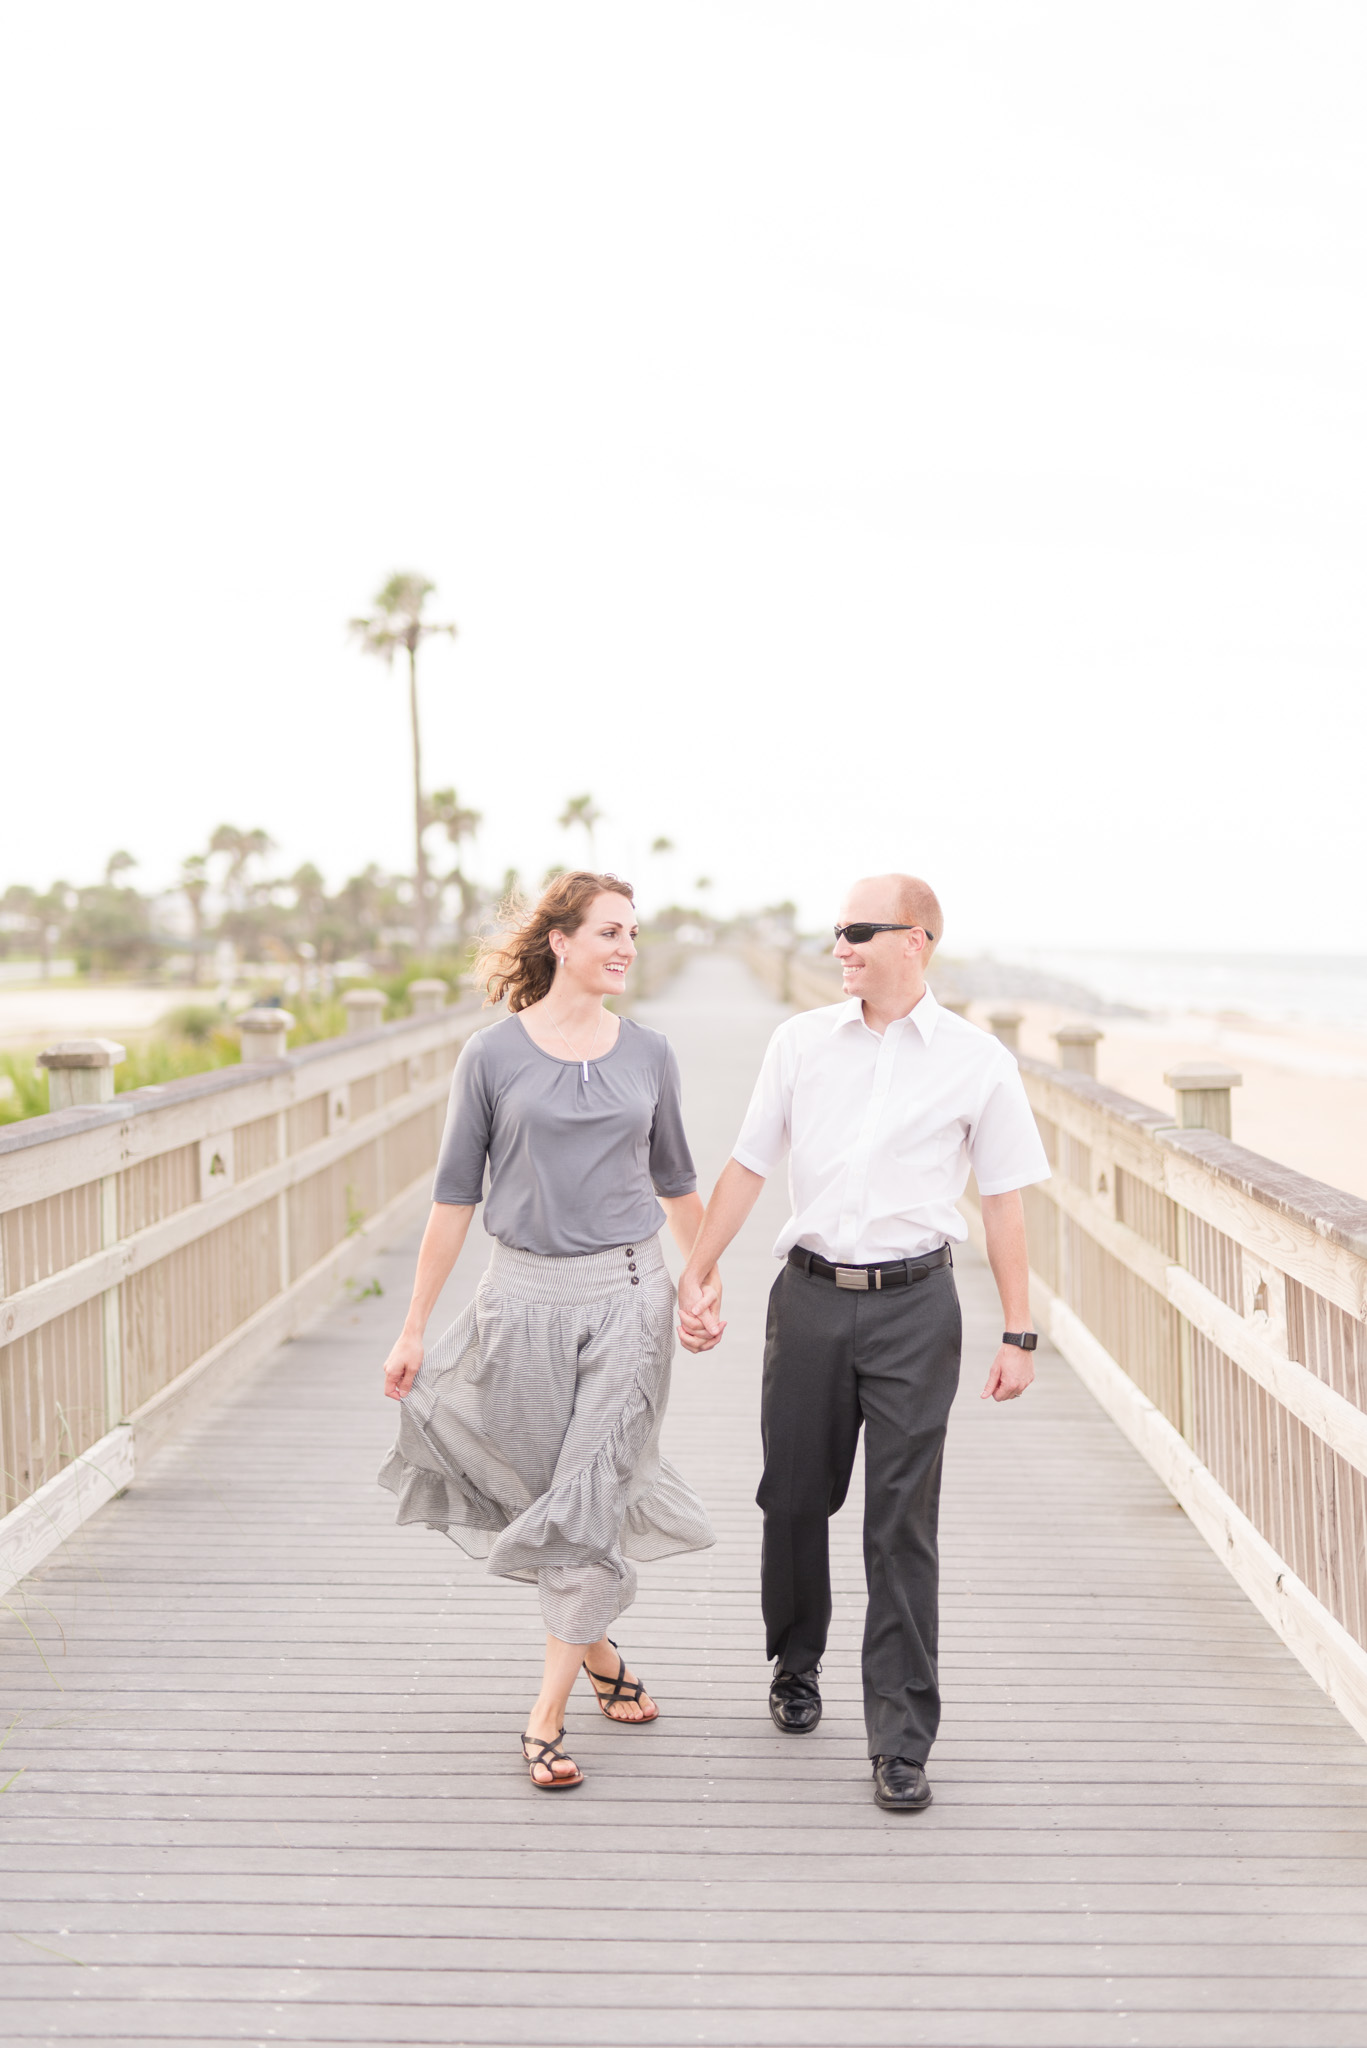 Couple walks together down boardwalk.